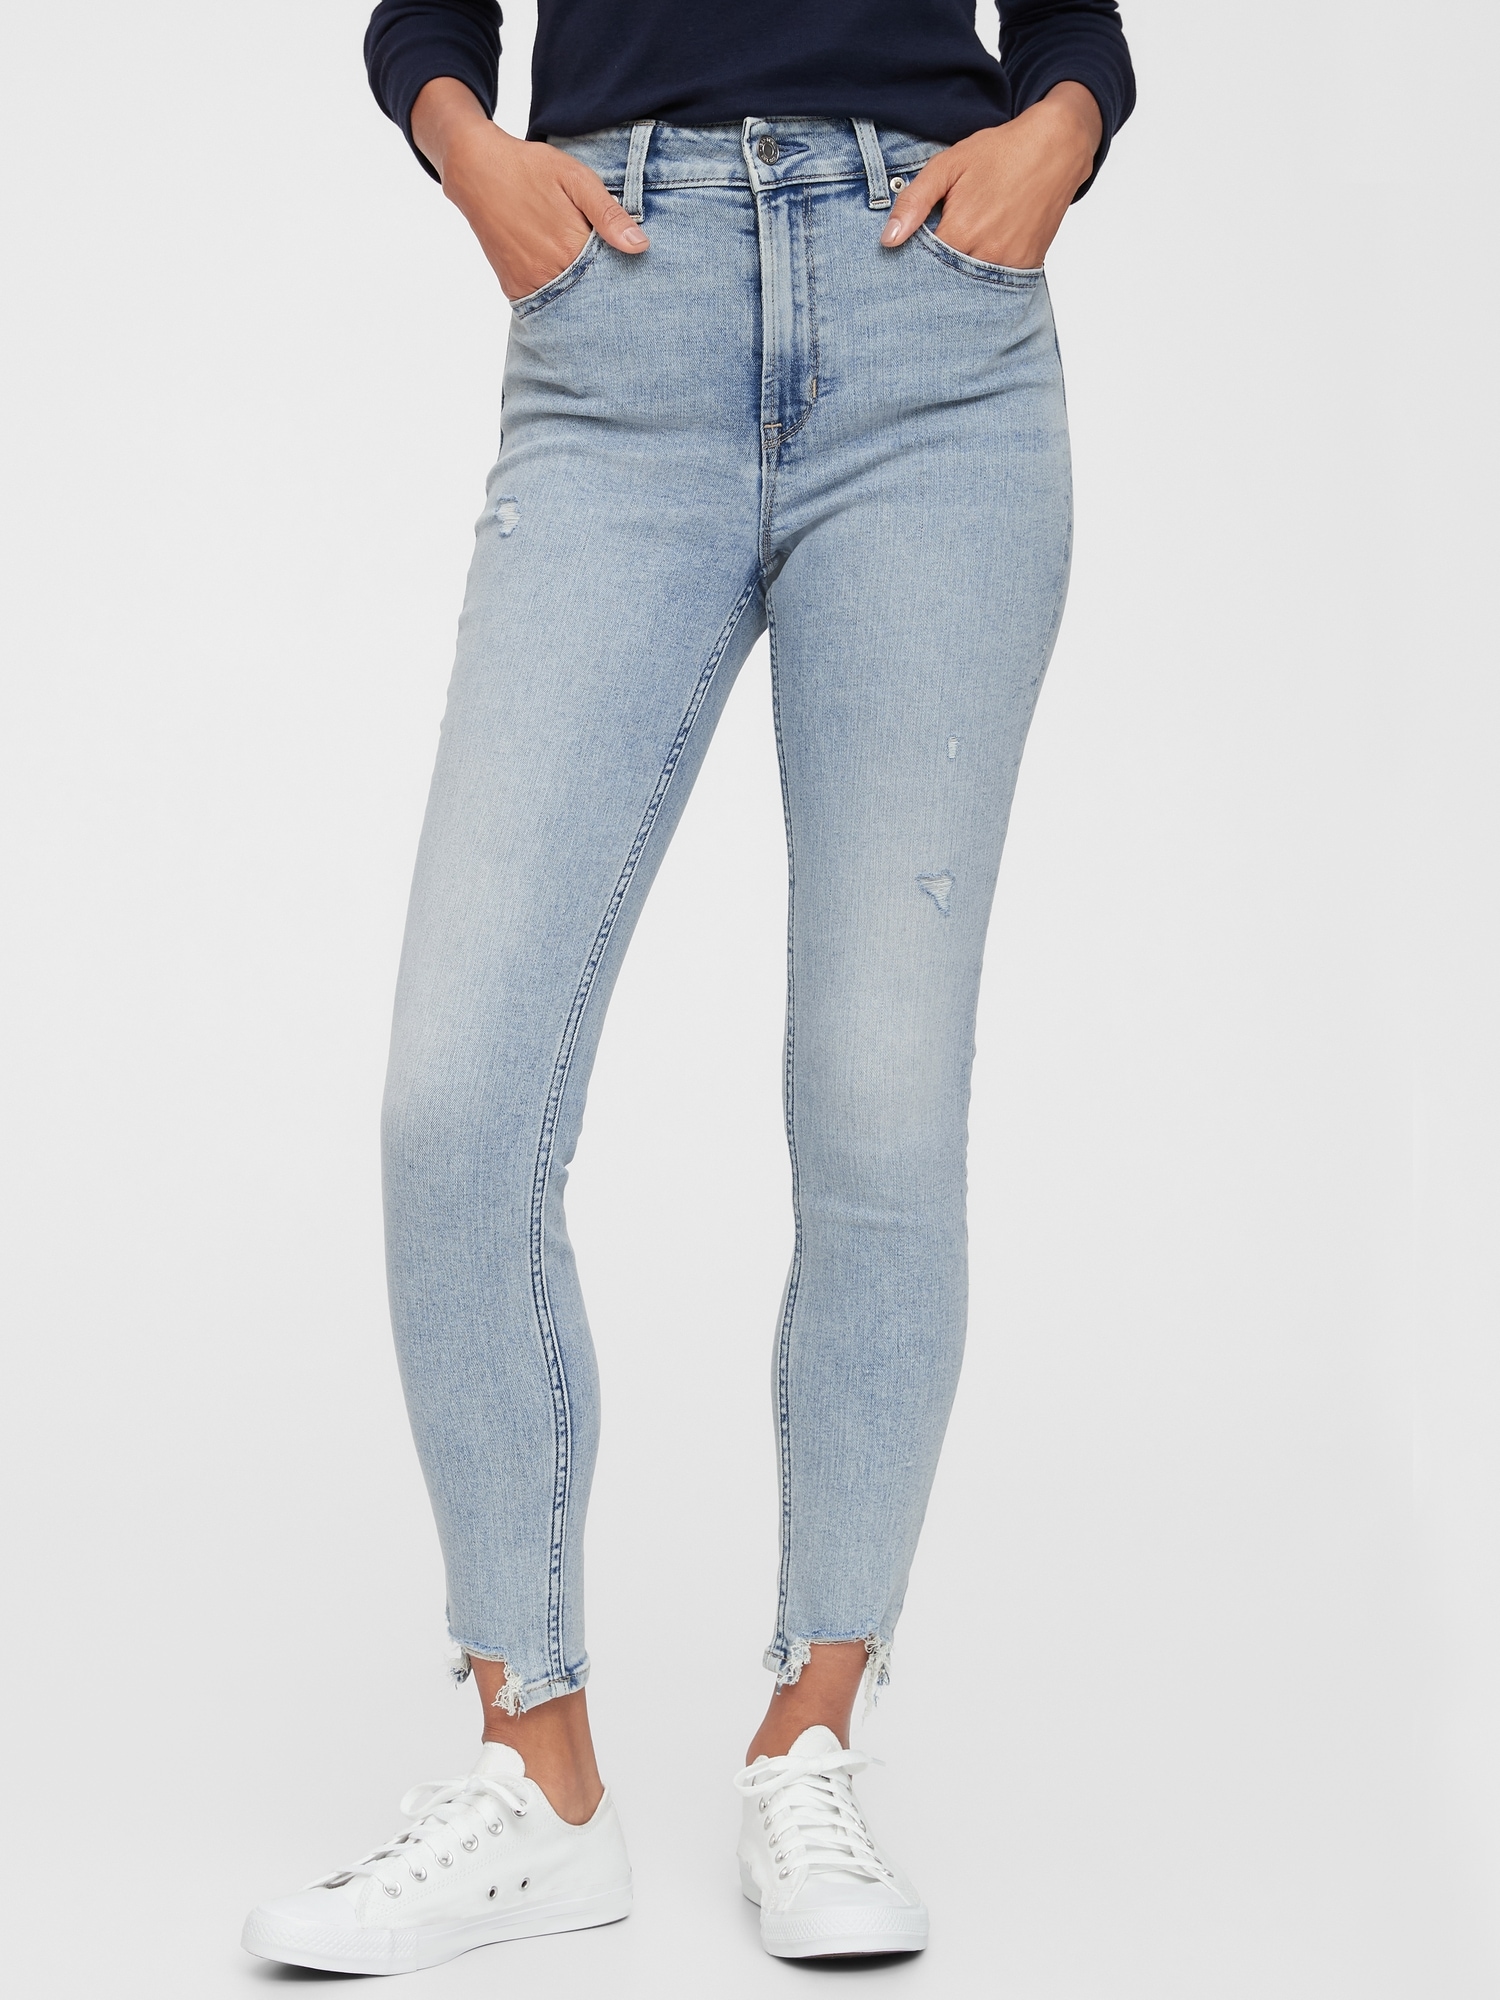 GAP Factory style jeans, “universal legging”.